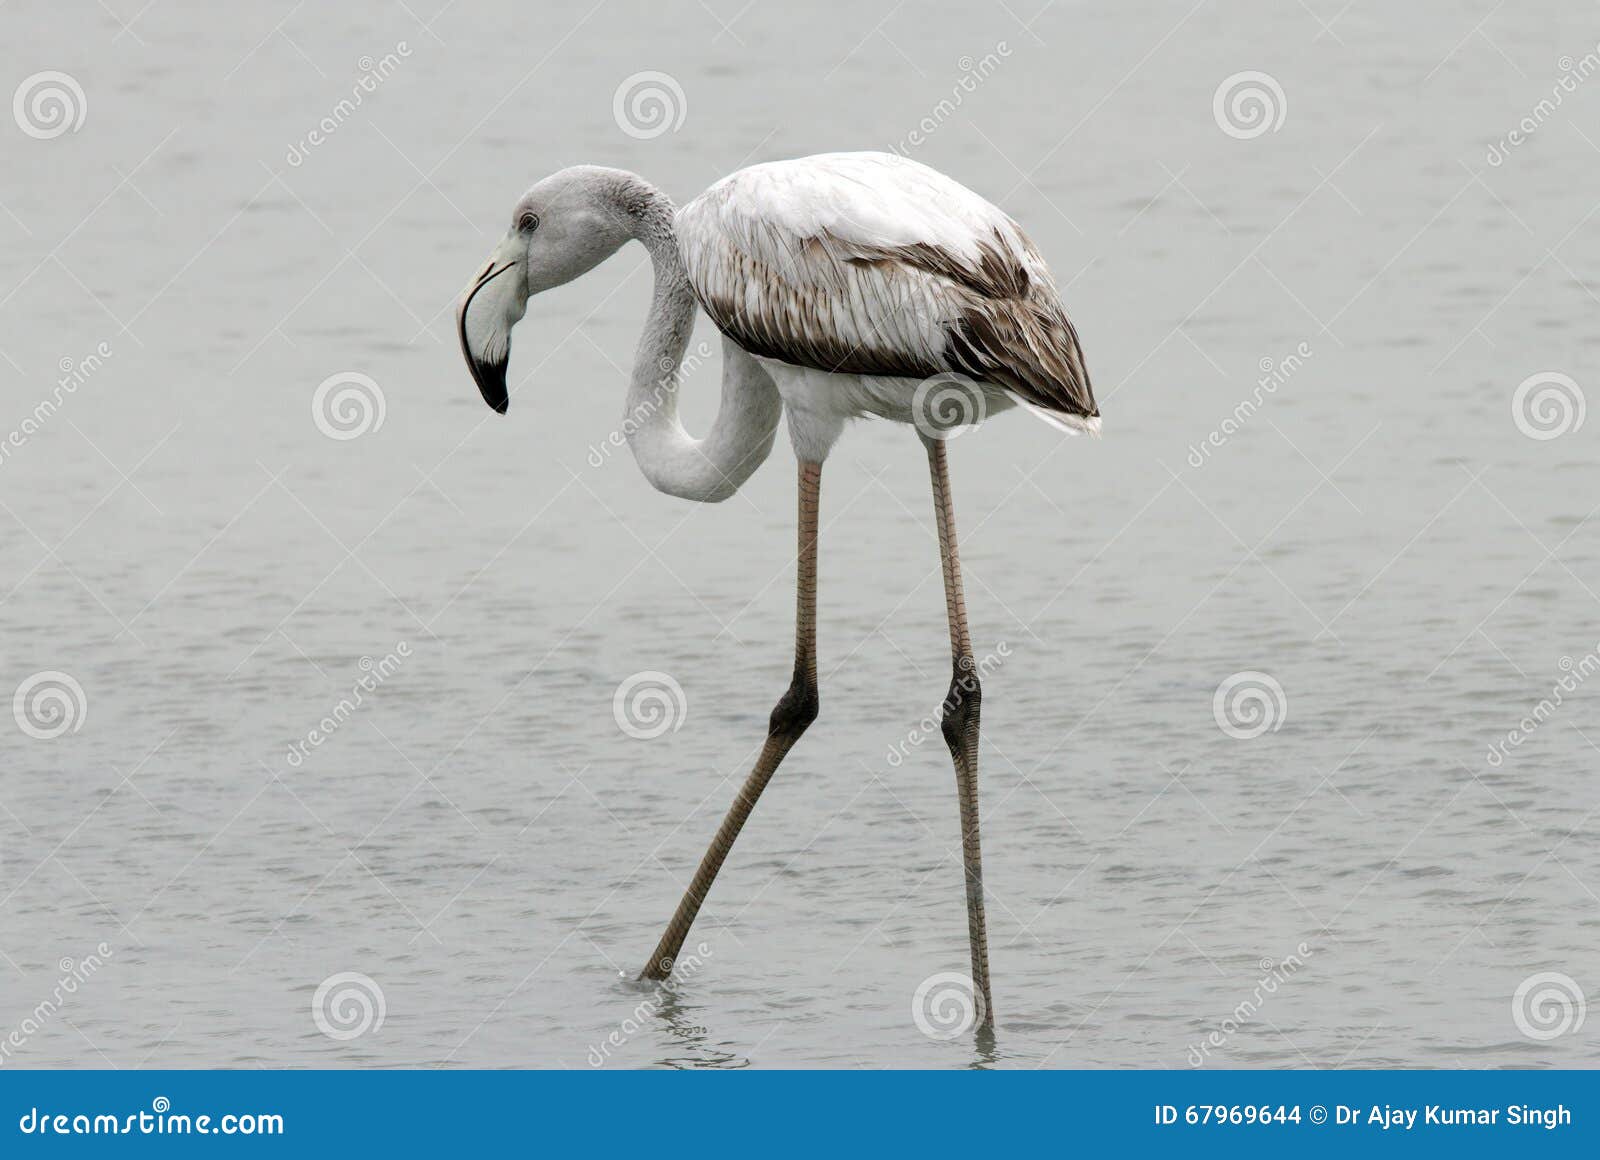 Juvenile Greater Flamingo stock photo. Image of feathered - 67969644